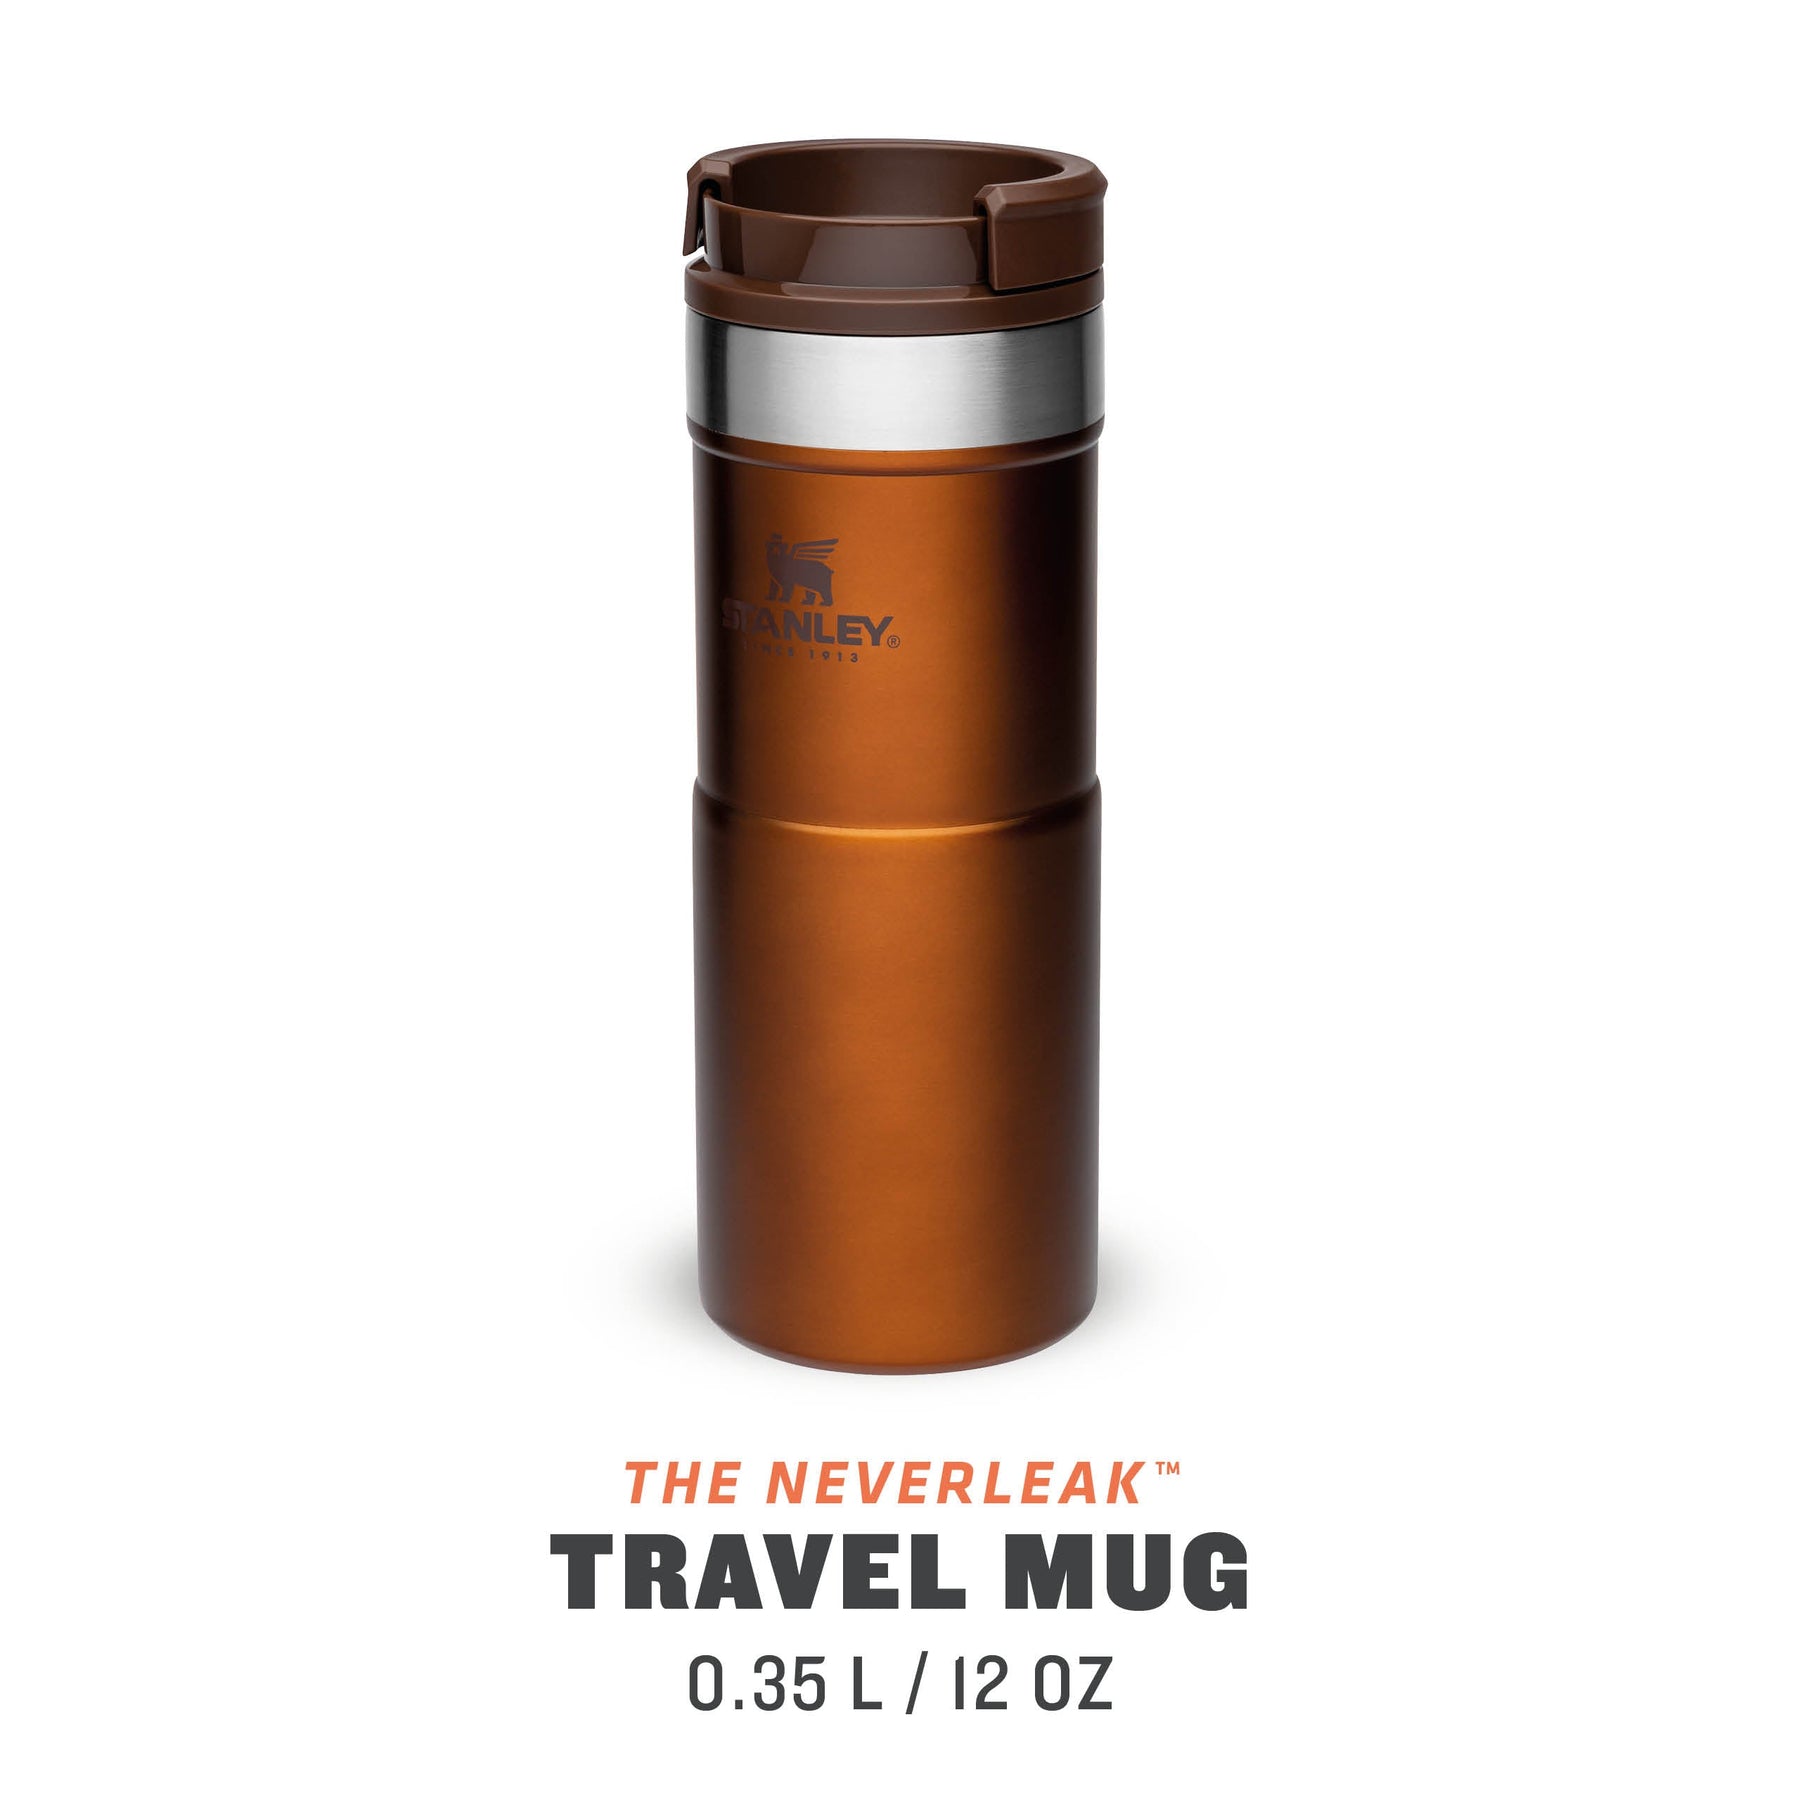 Classic Trigger Action Travel Mug, 0.35 L